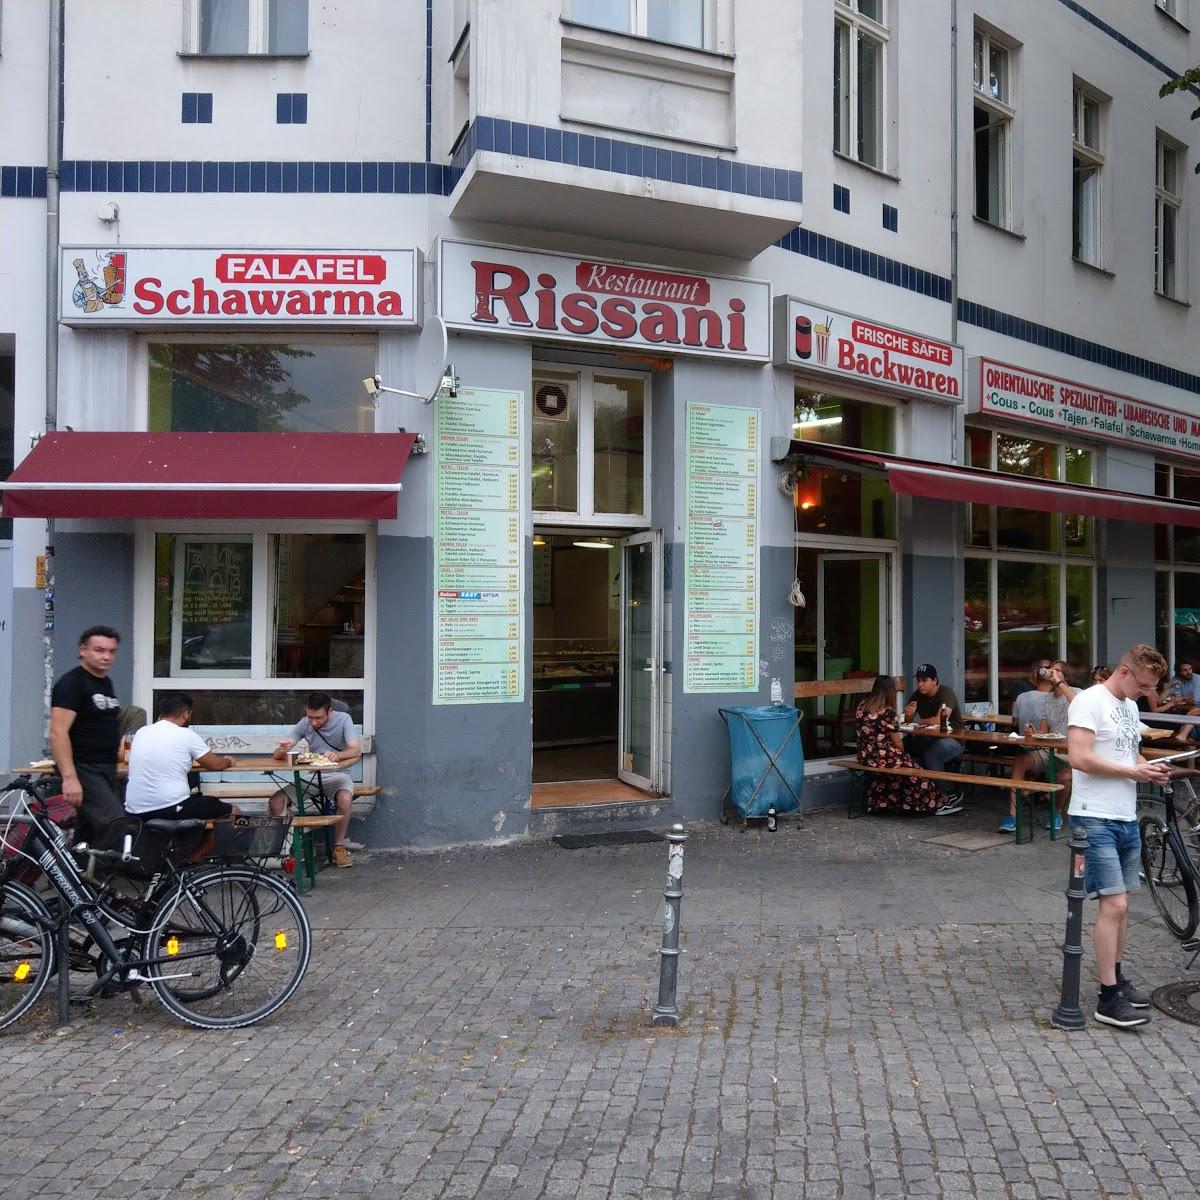 Restaurant "Rissani" in Berlin